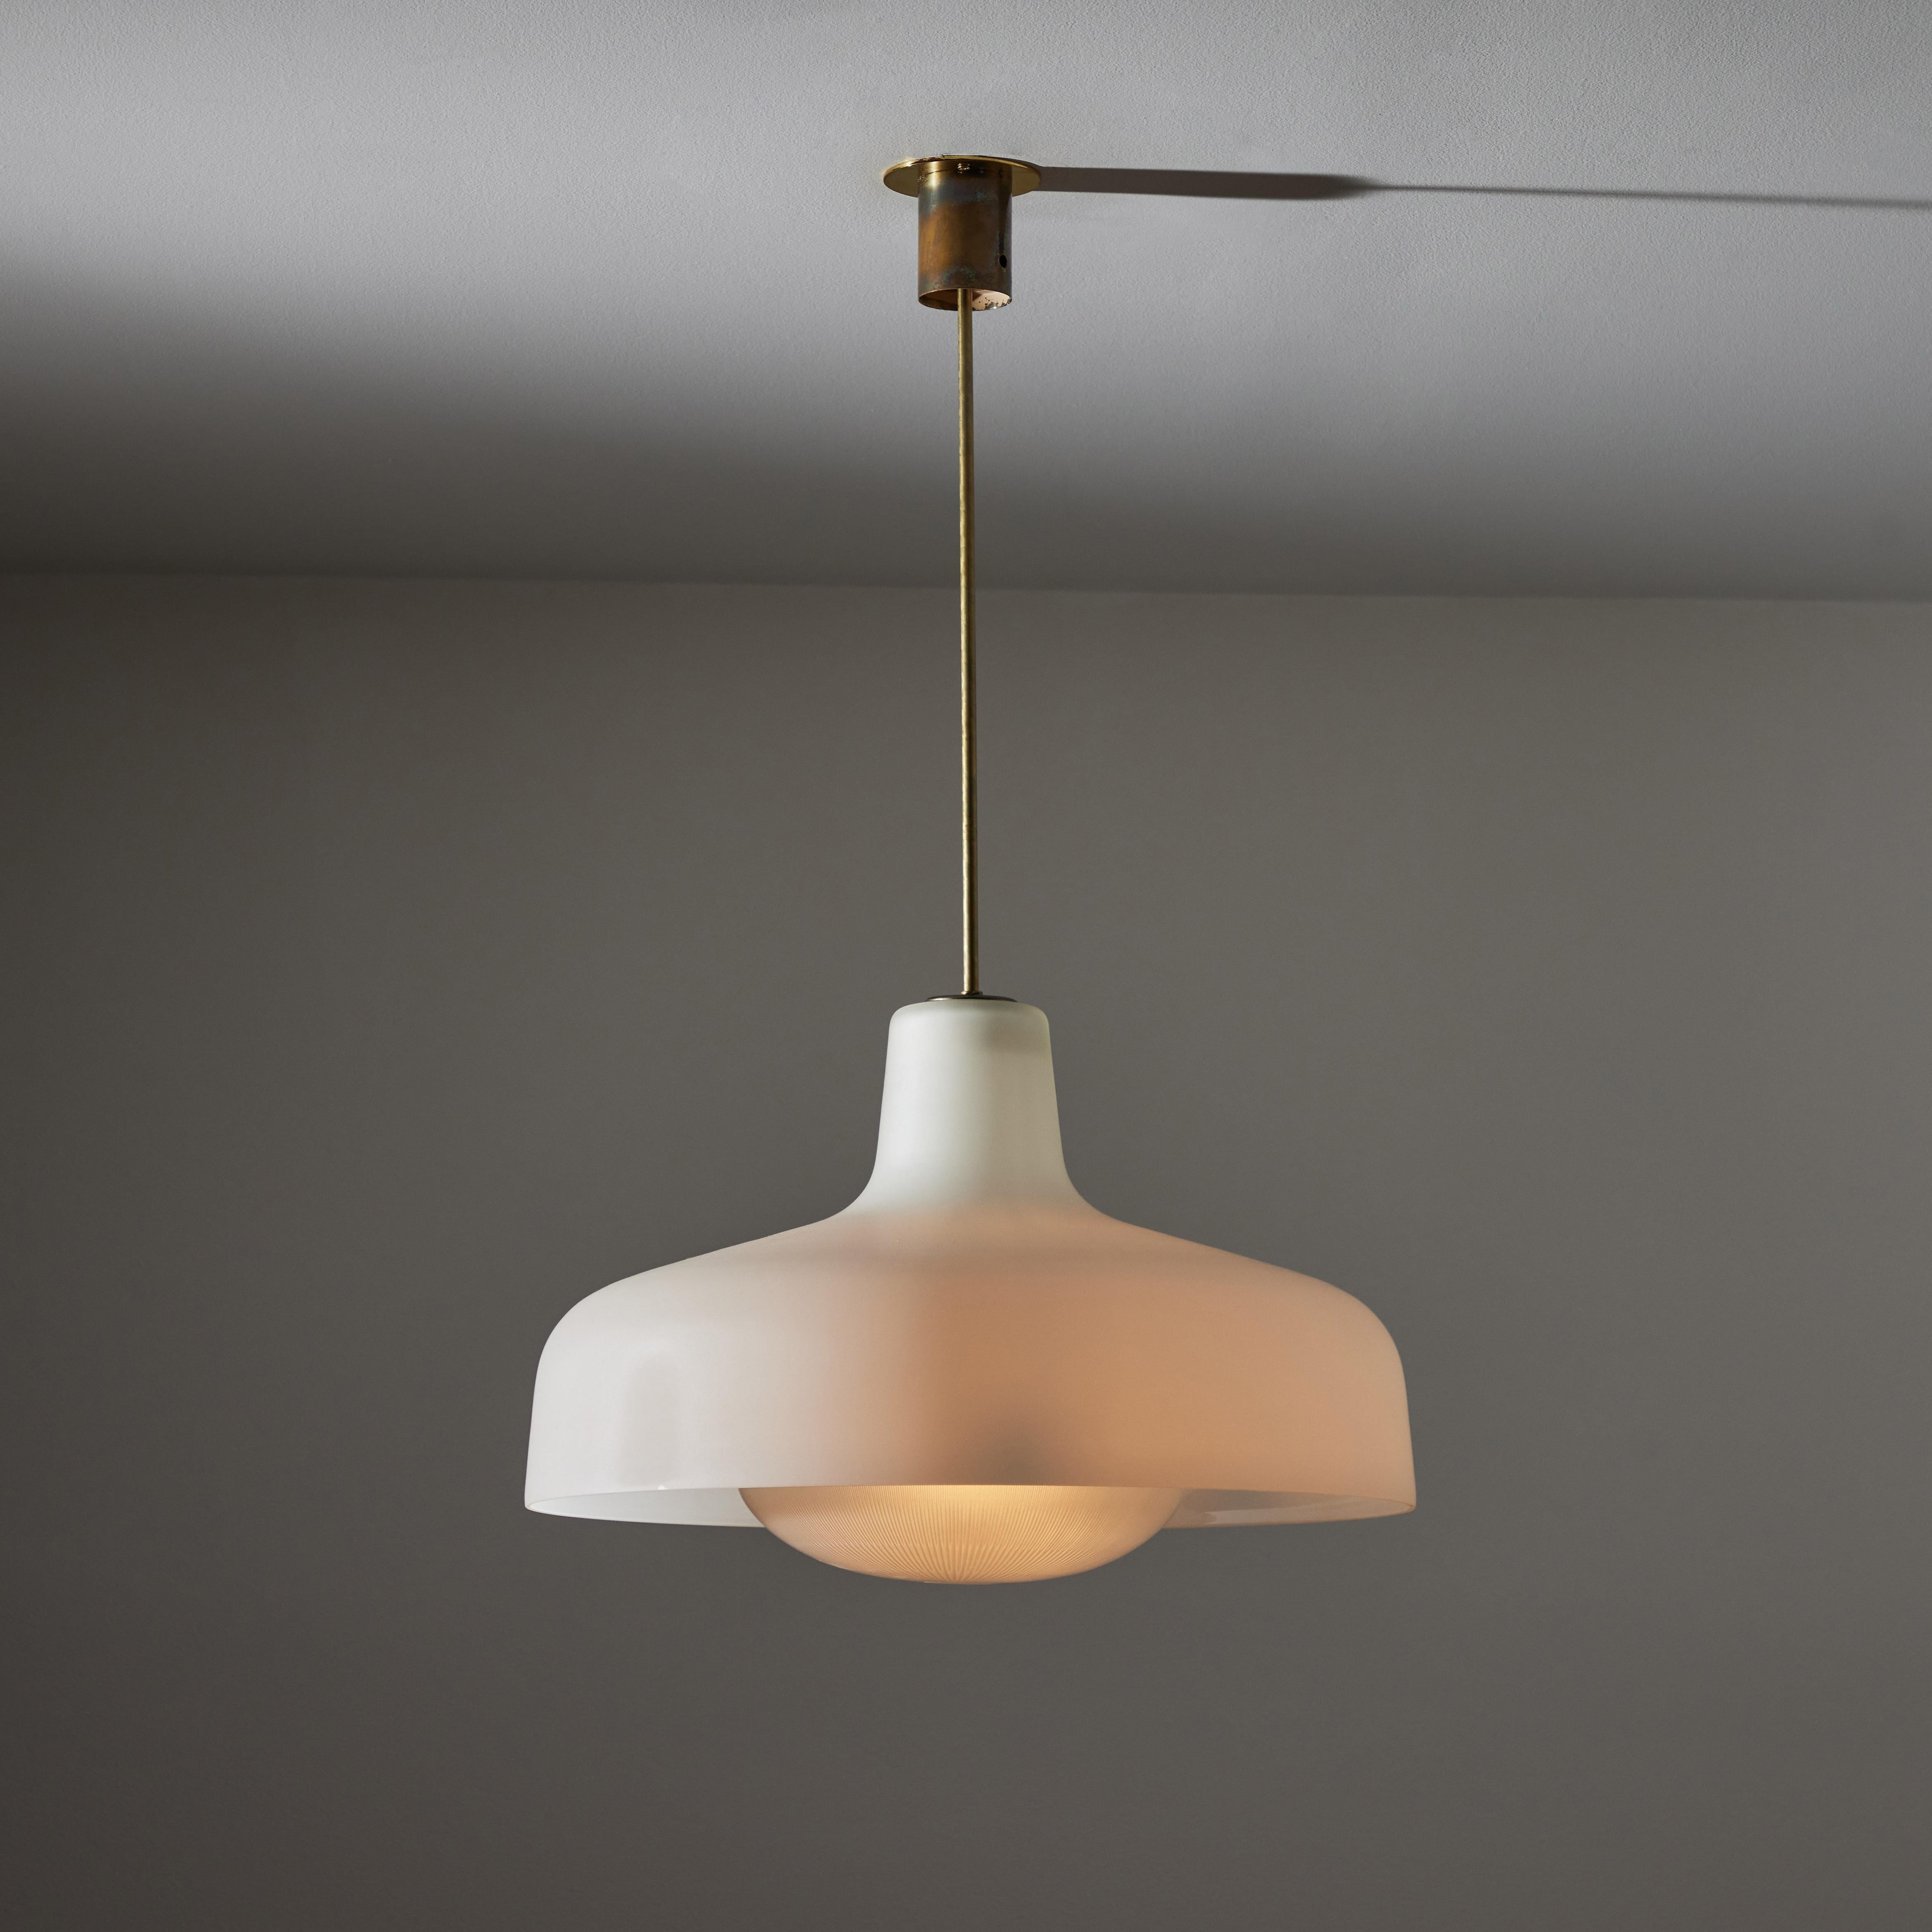 Italian Model LS7 “Paolina” Ceiling Light by Ignazio Gardella for Azucena